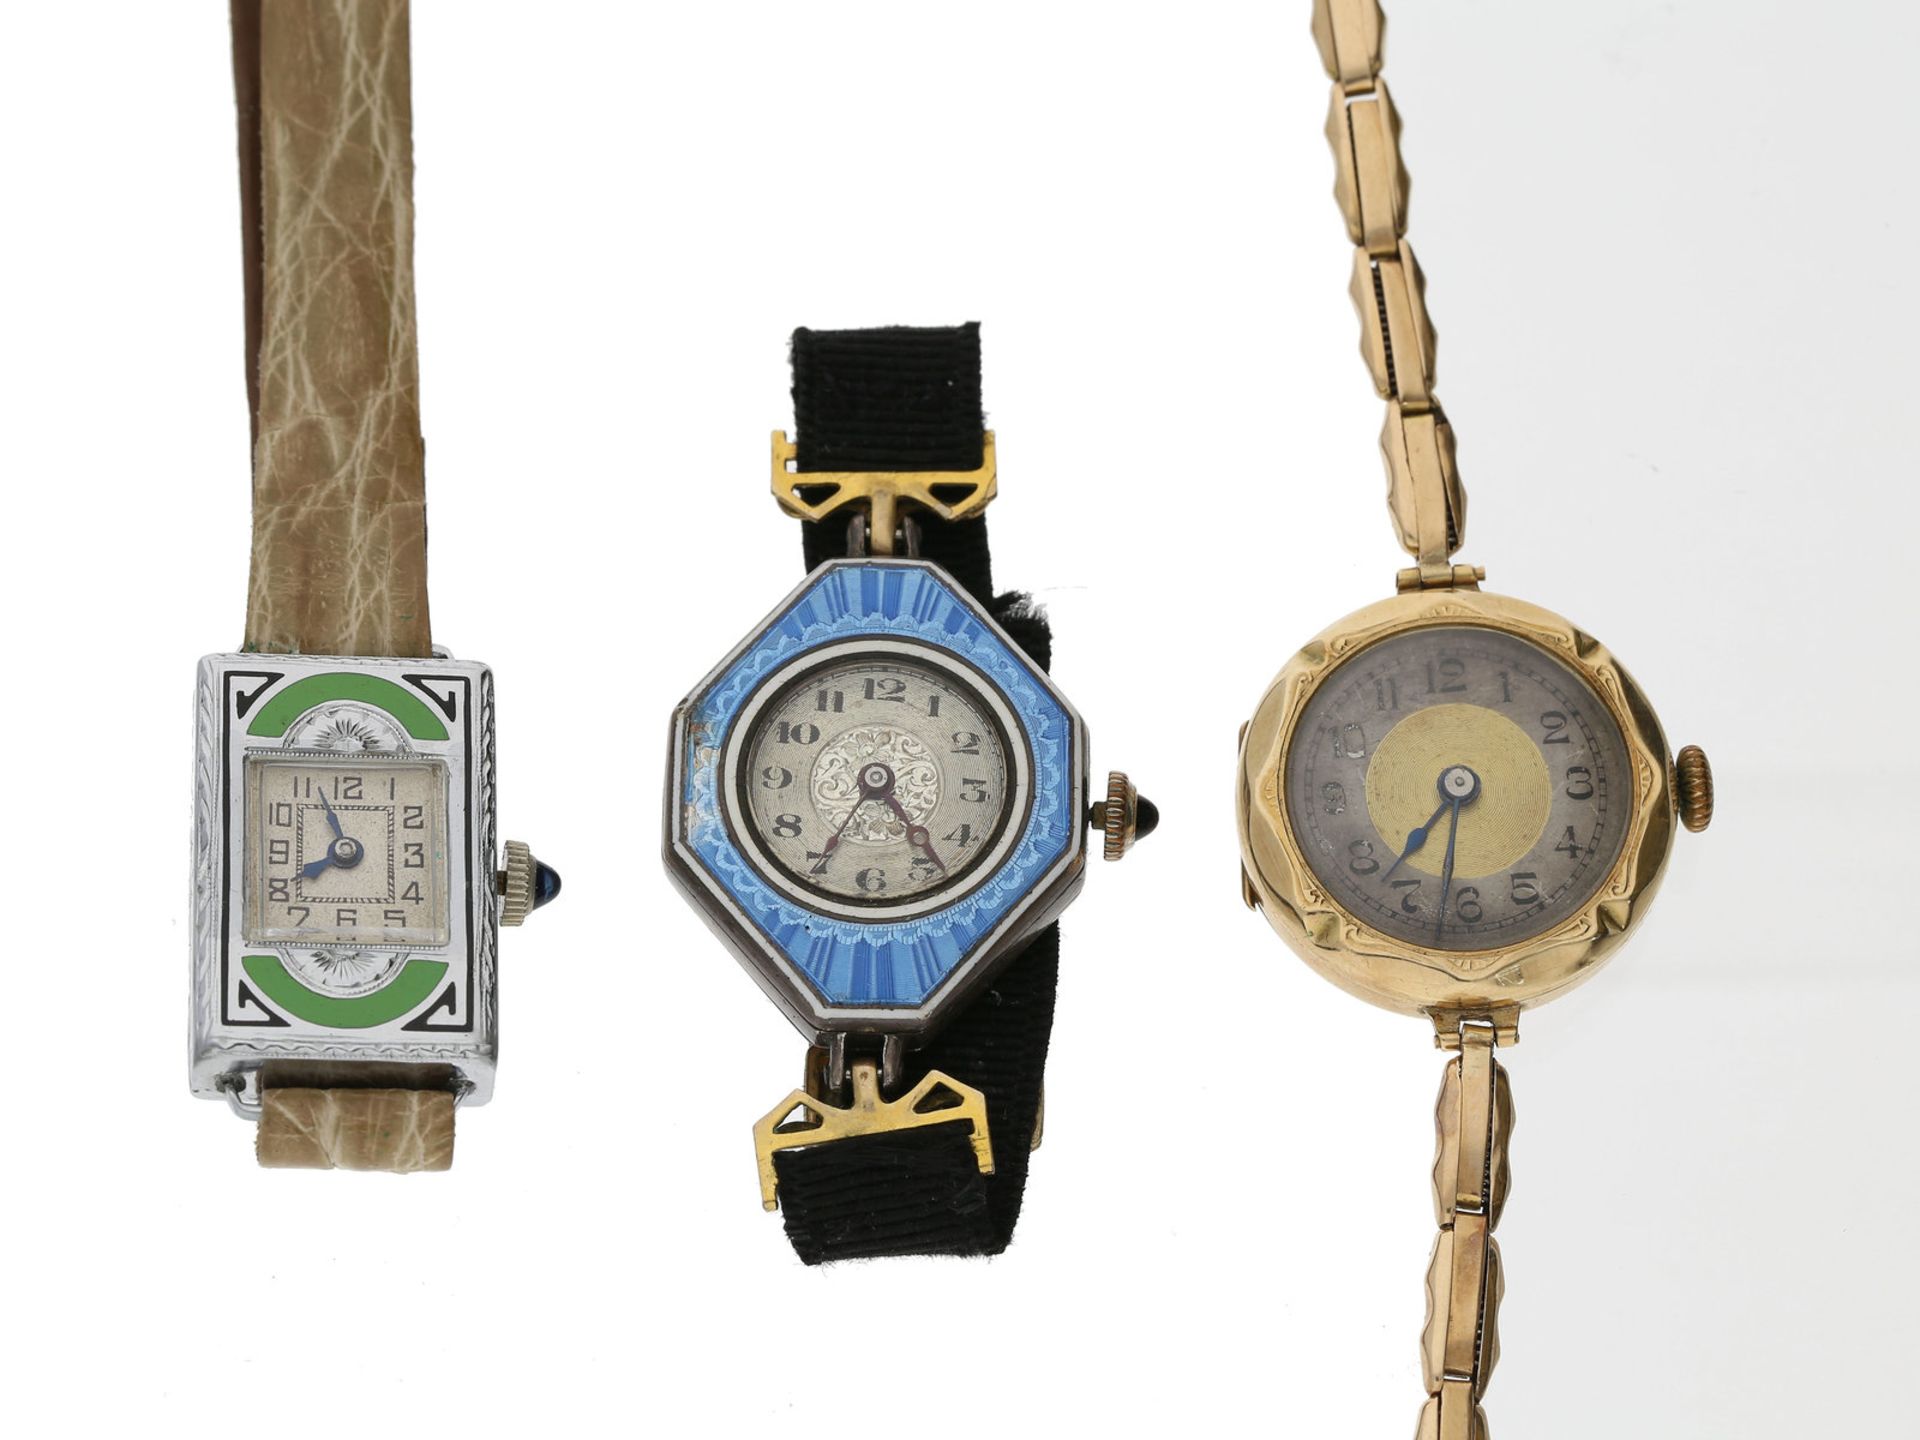 Armbanduhr: interessantes Konvolut von 3 antiken Armbanduhren, ca. 1910-19301. goldene